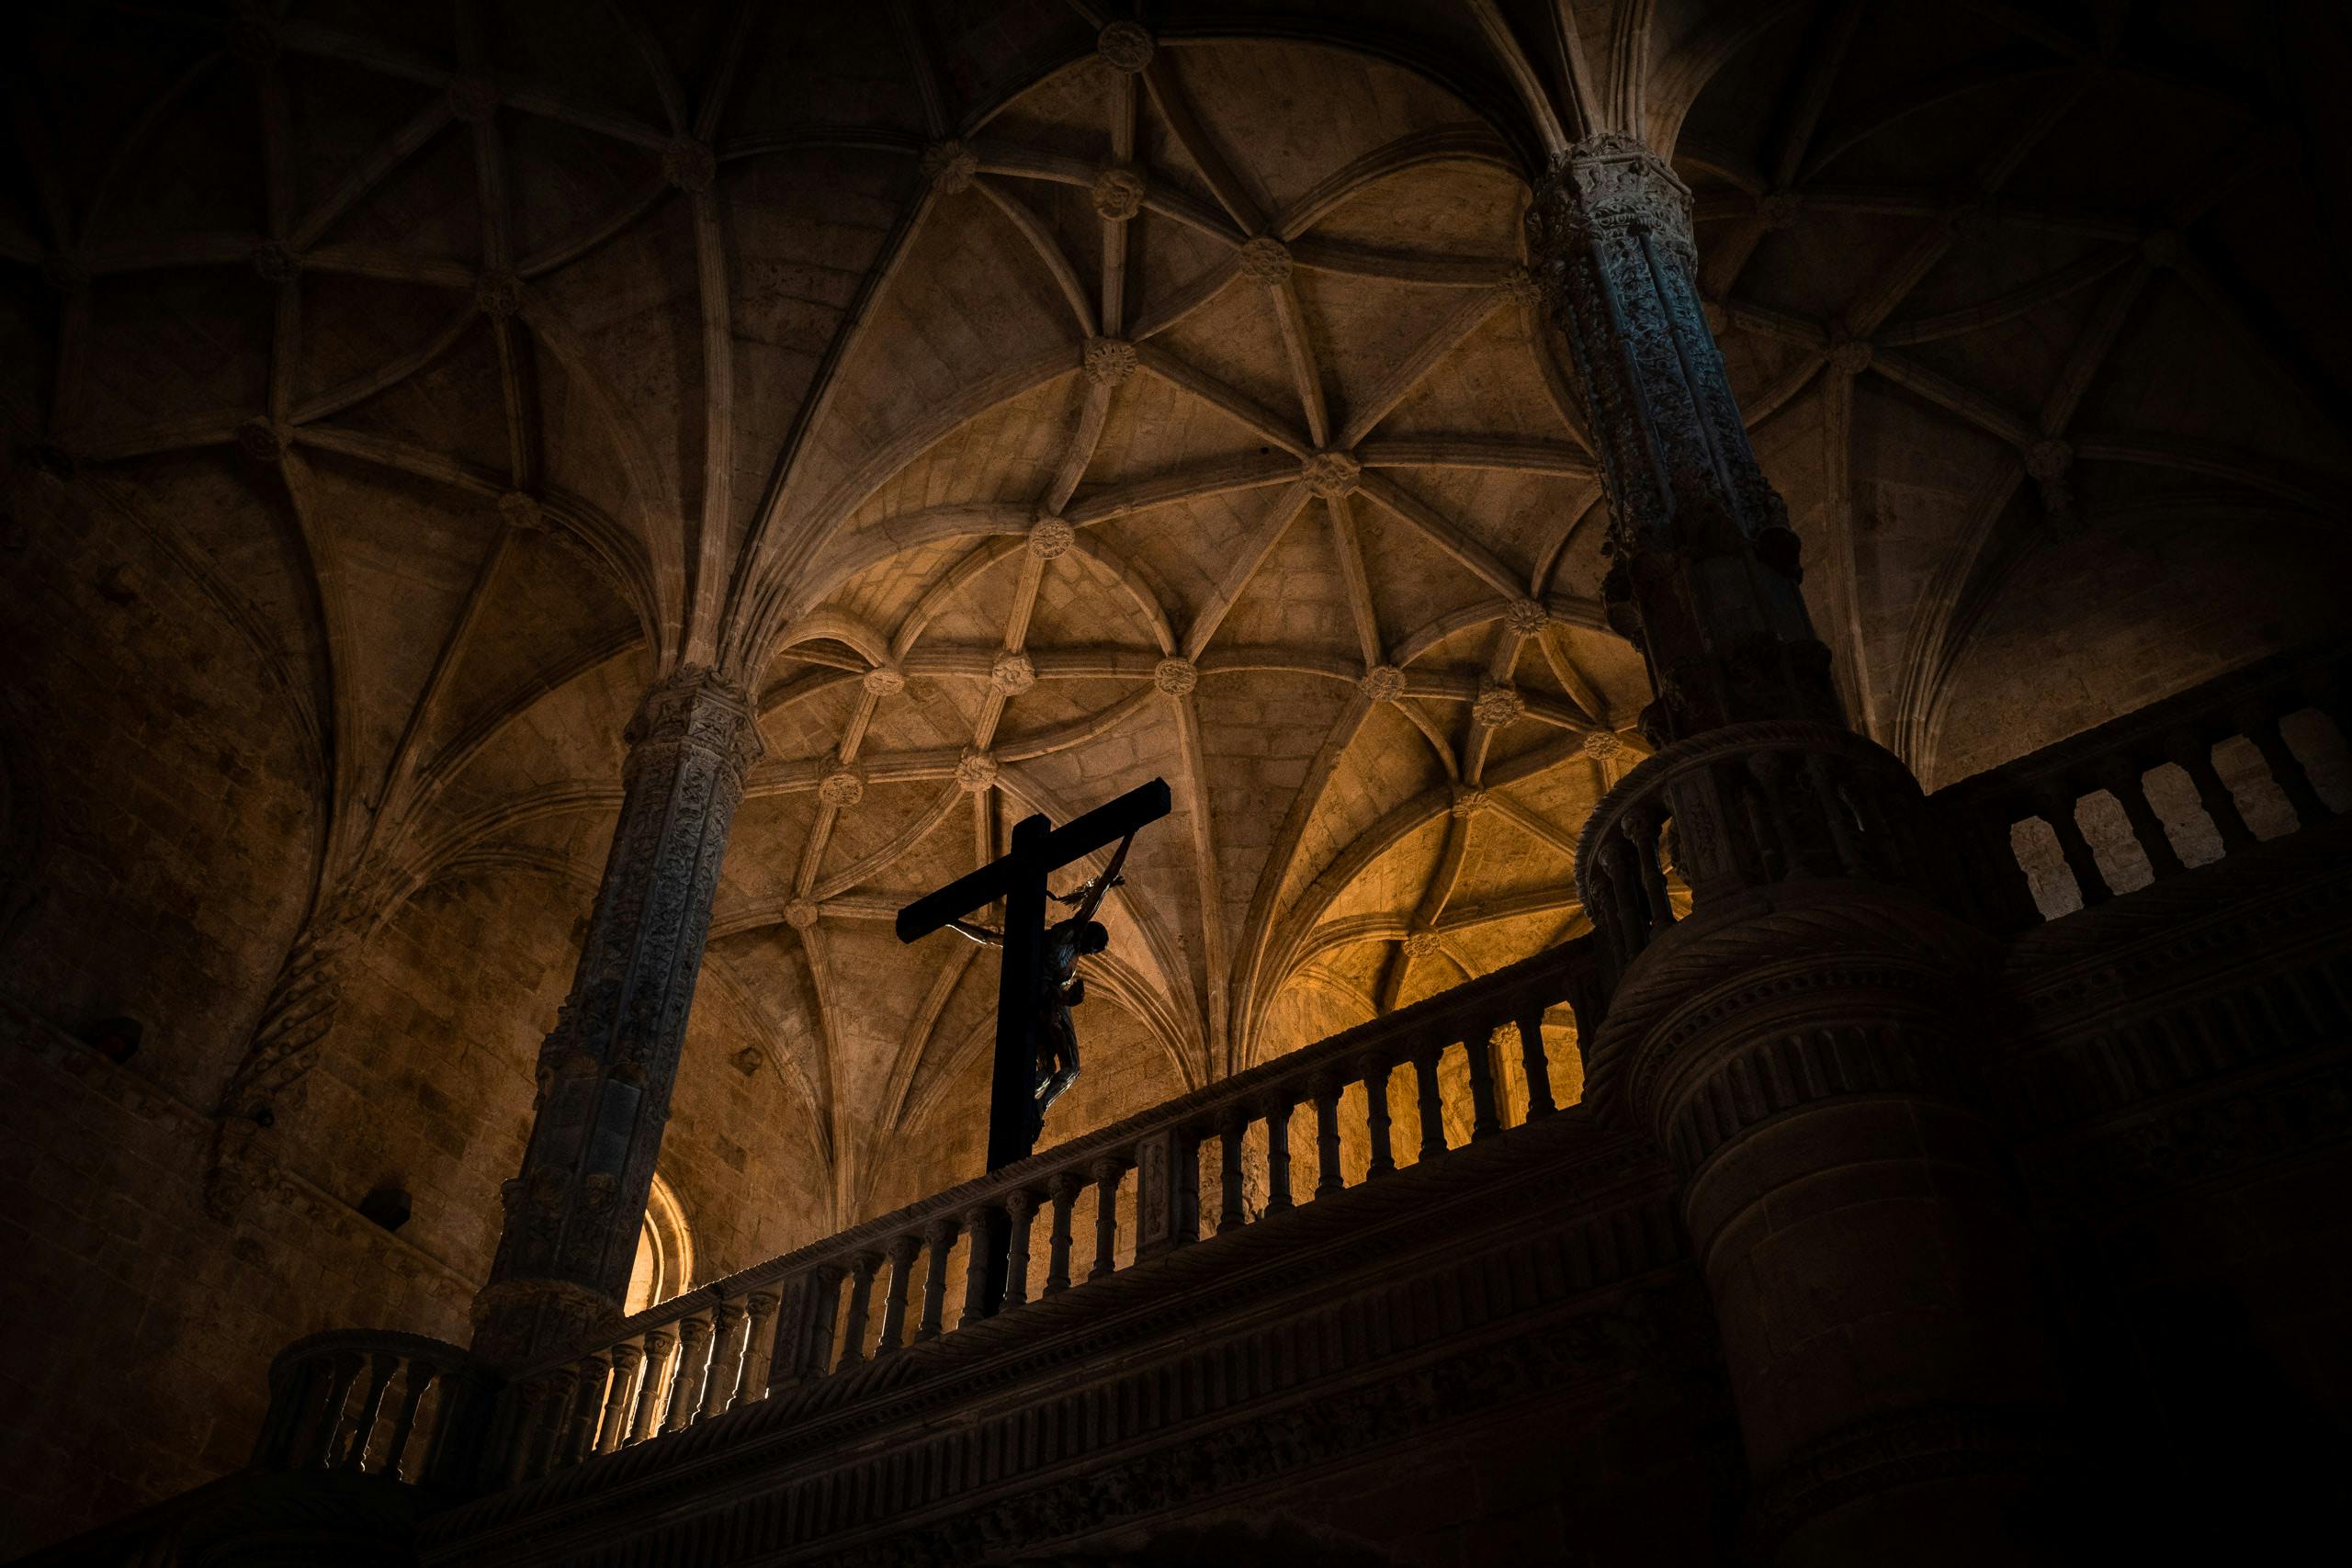 View from below of Jesus on cross inside a monastery